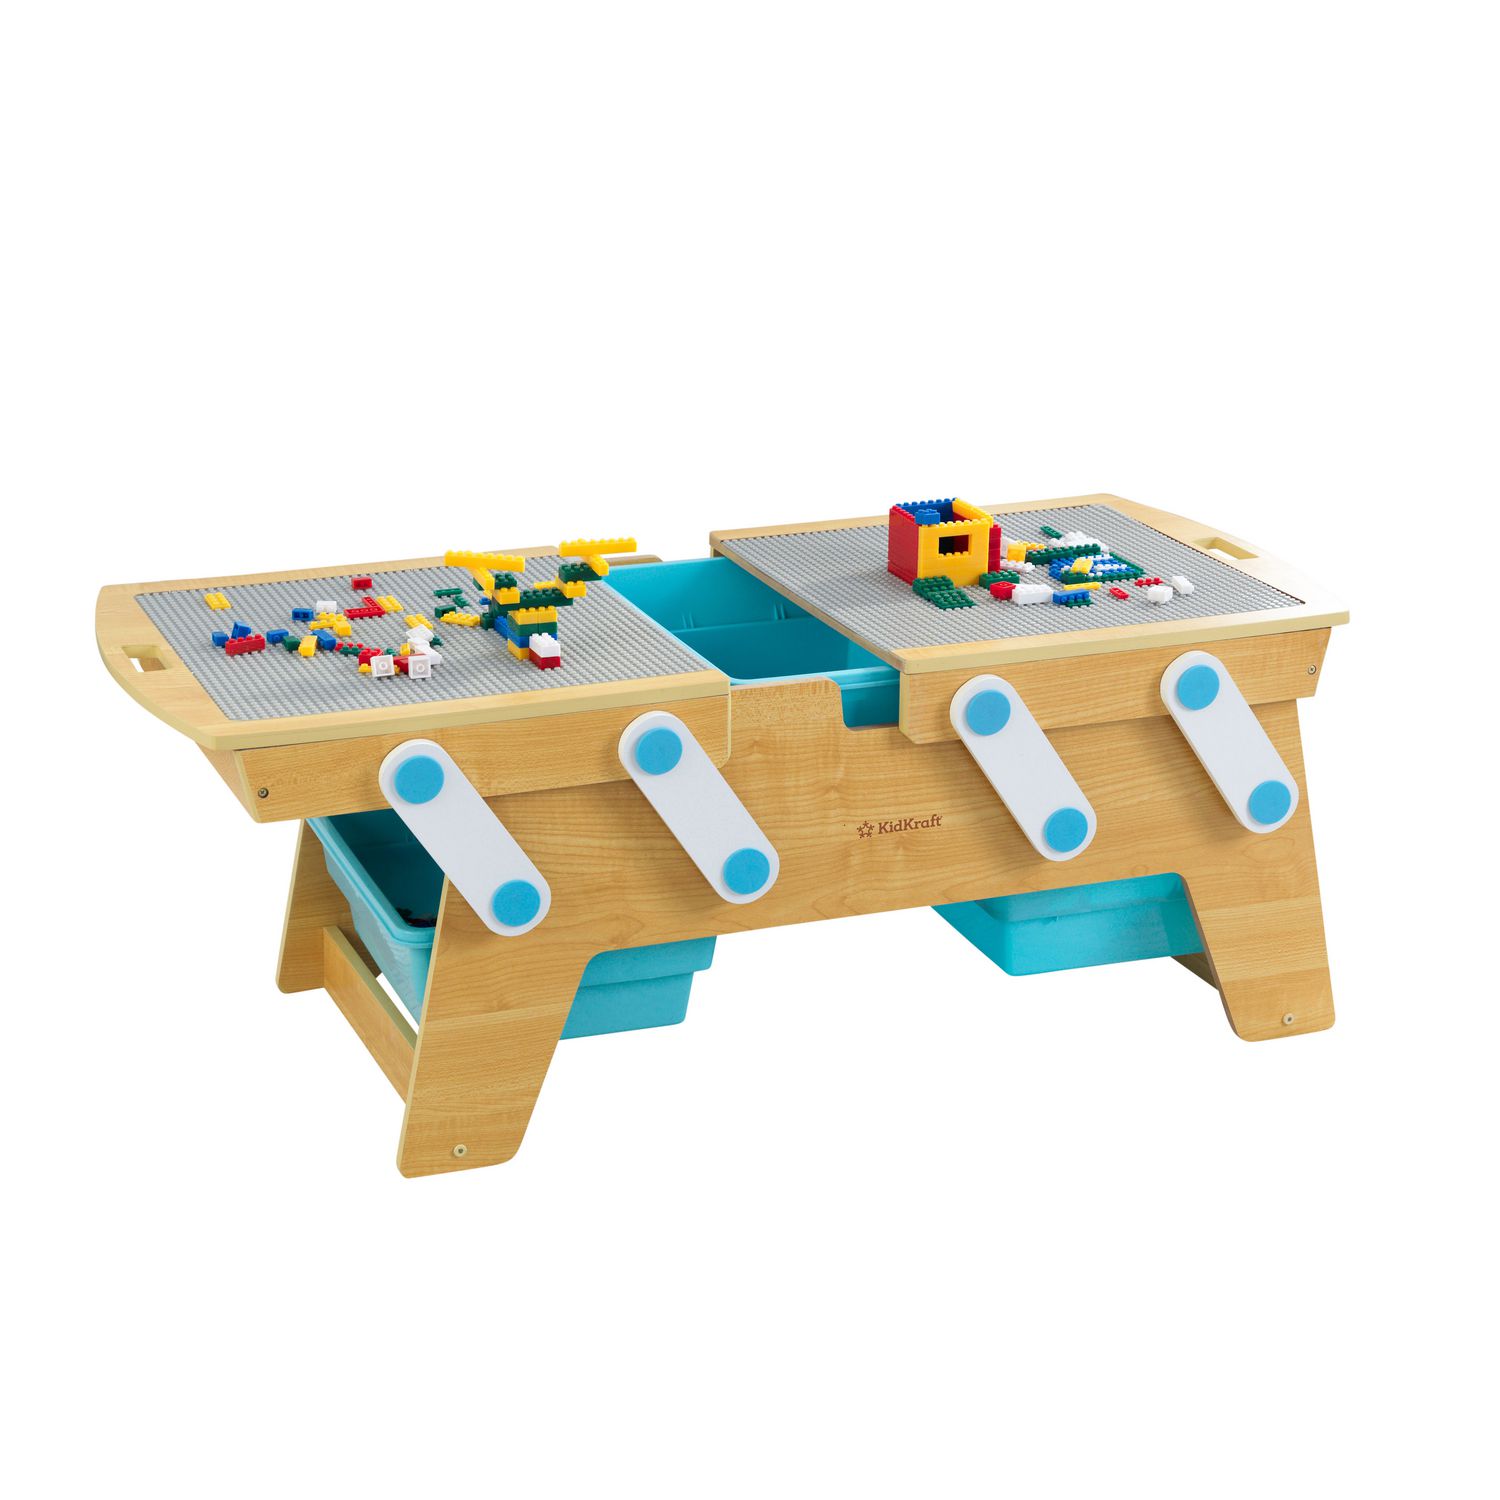 Kidkraft Building Bricks Play N Store Table Walmart Canada